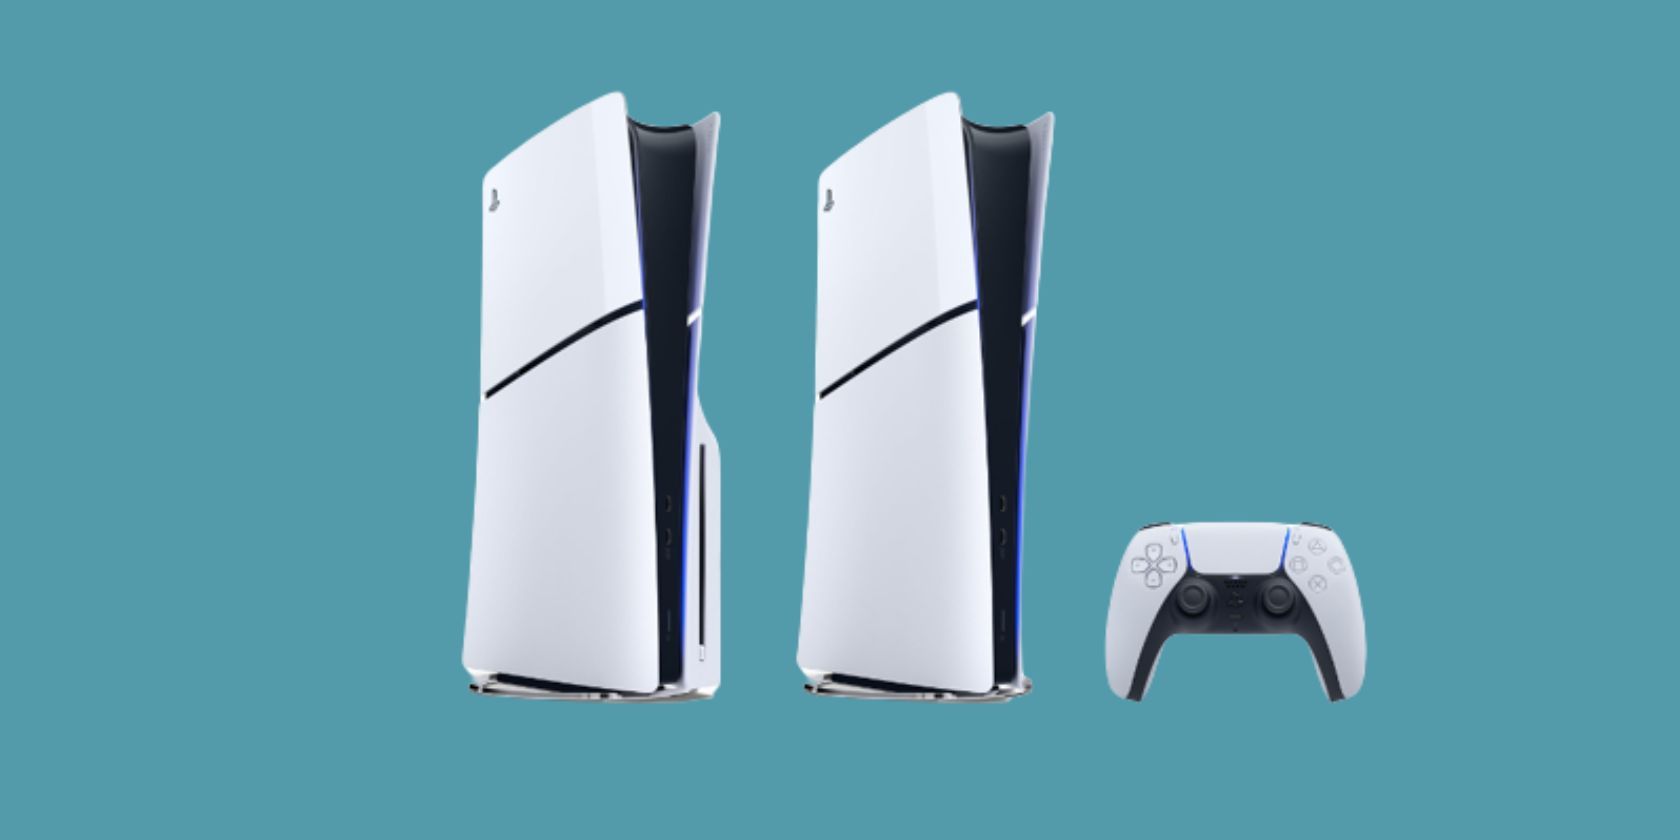 The new Playstation slim models on a dark blue background